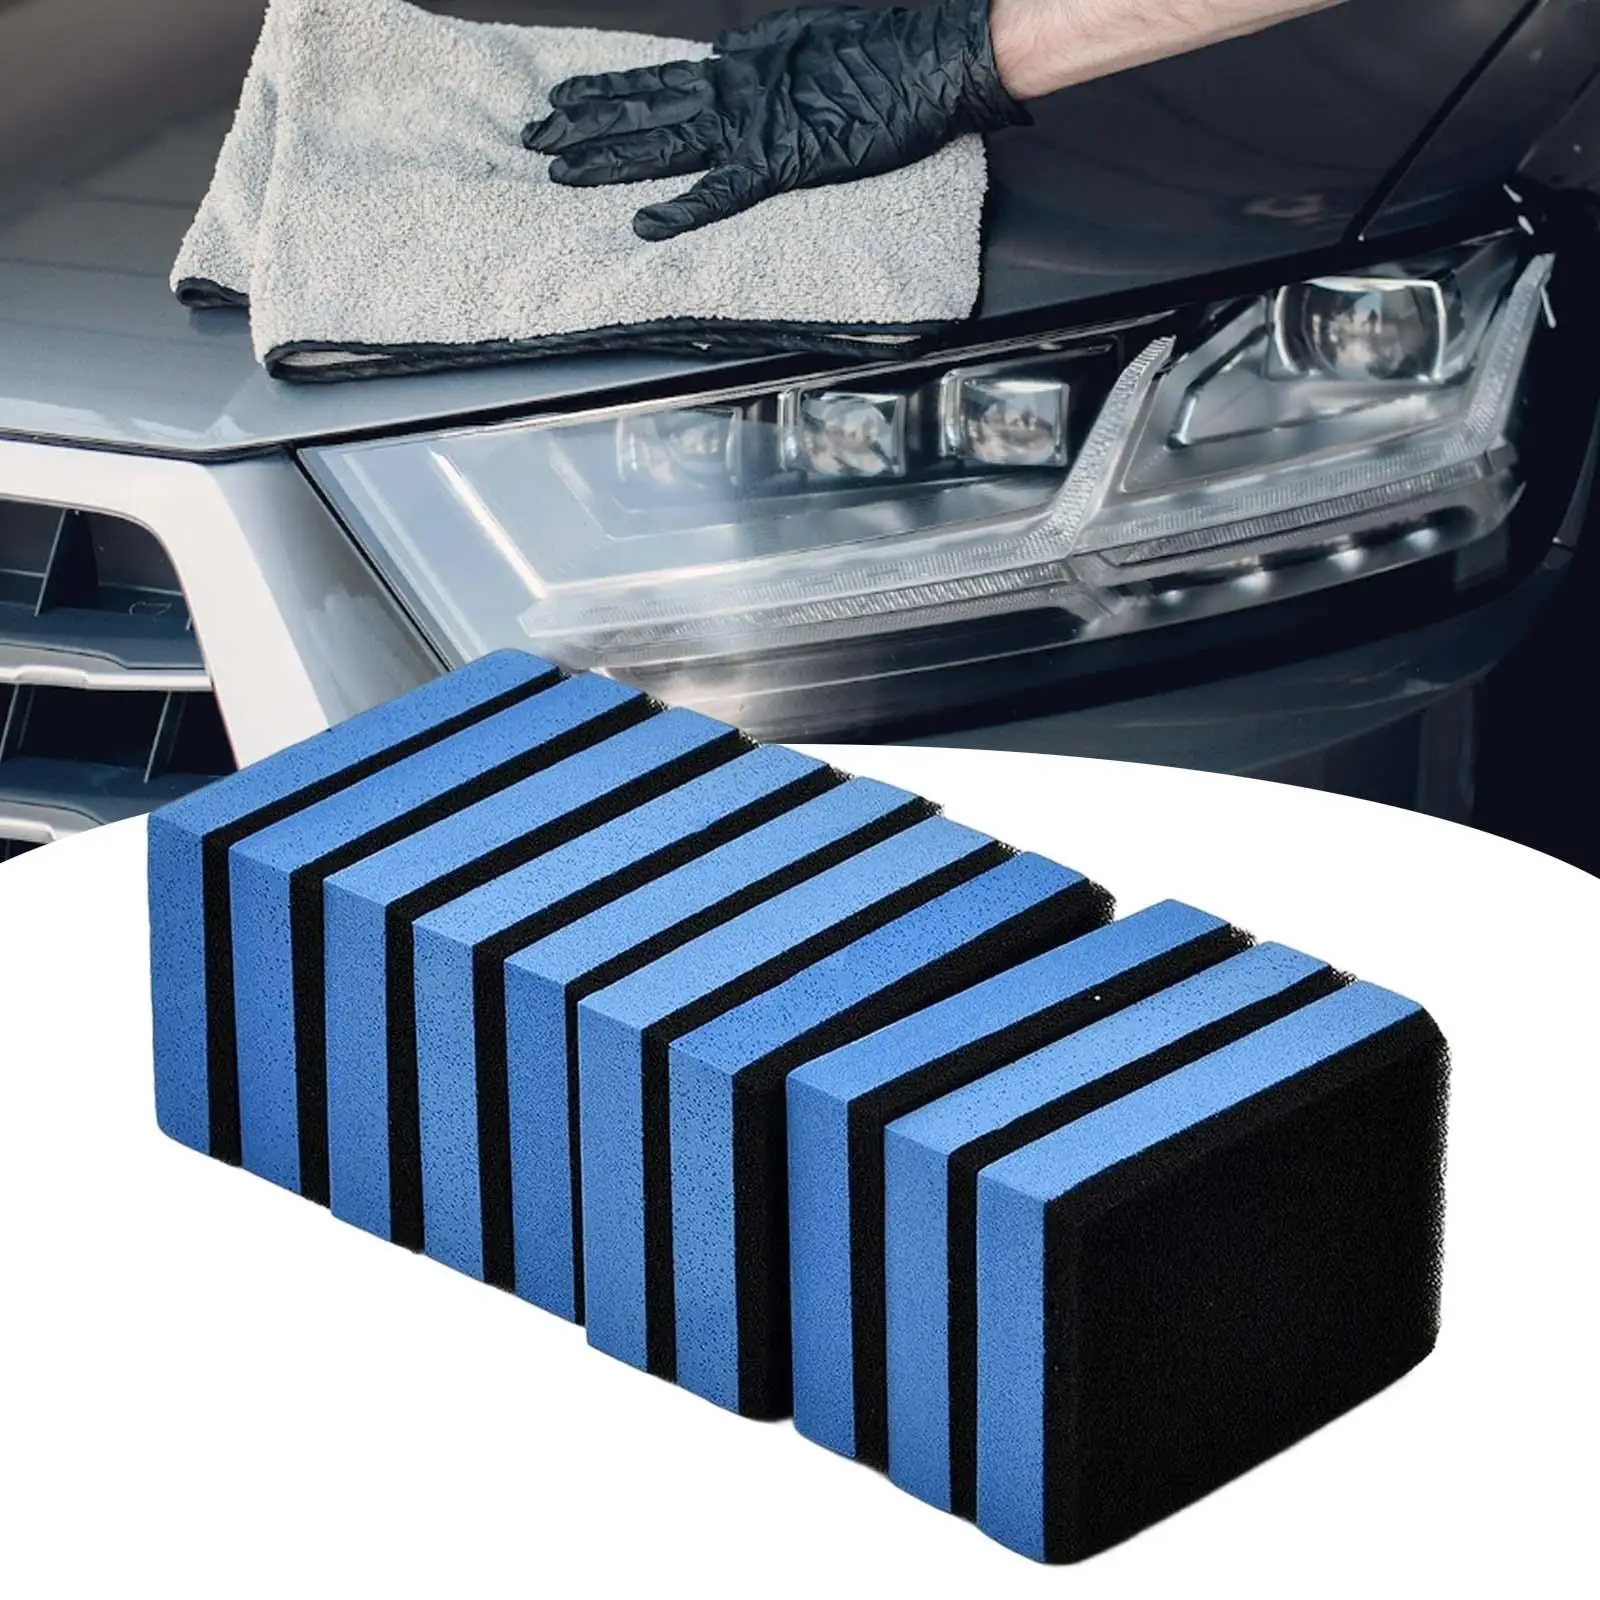 10x Car Waxing Polishing Pads/ Soft Buffing Tool Ceramic Coating Applicator/